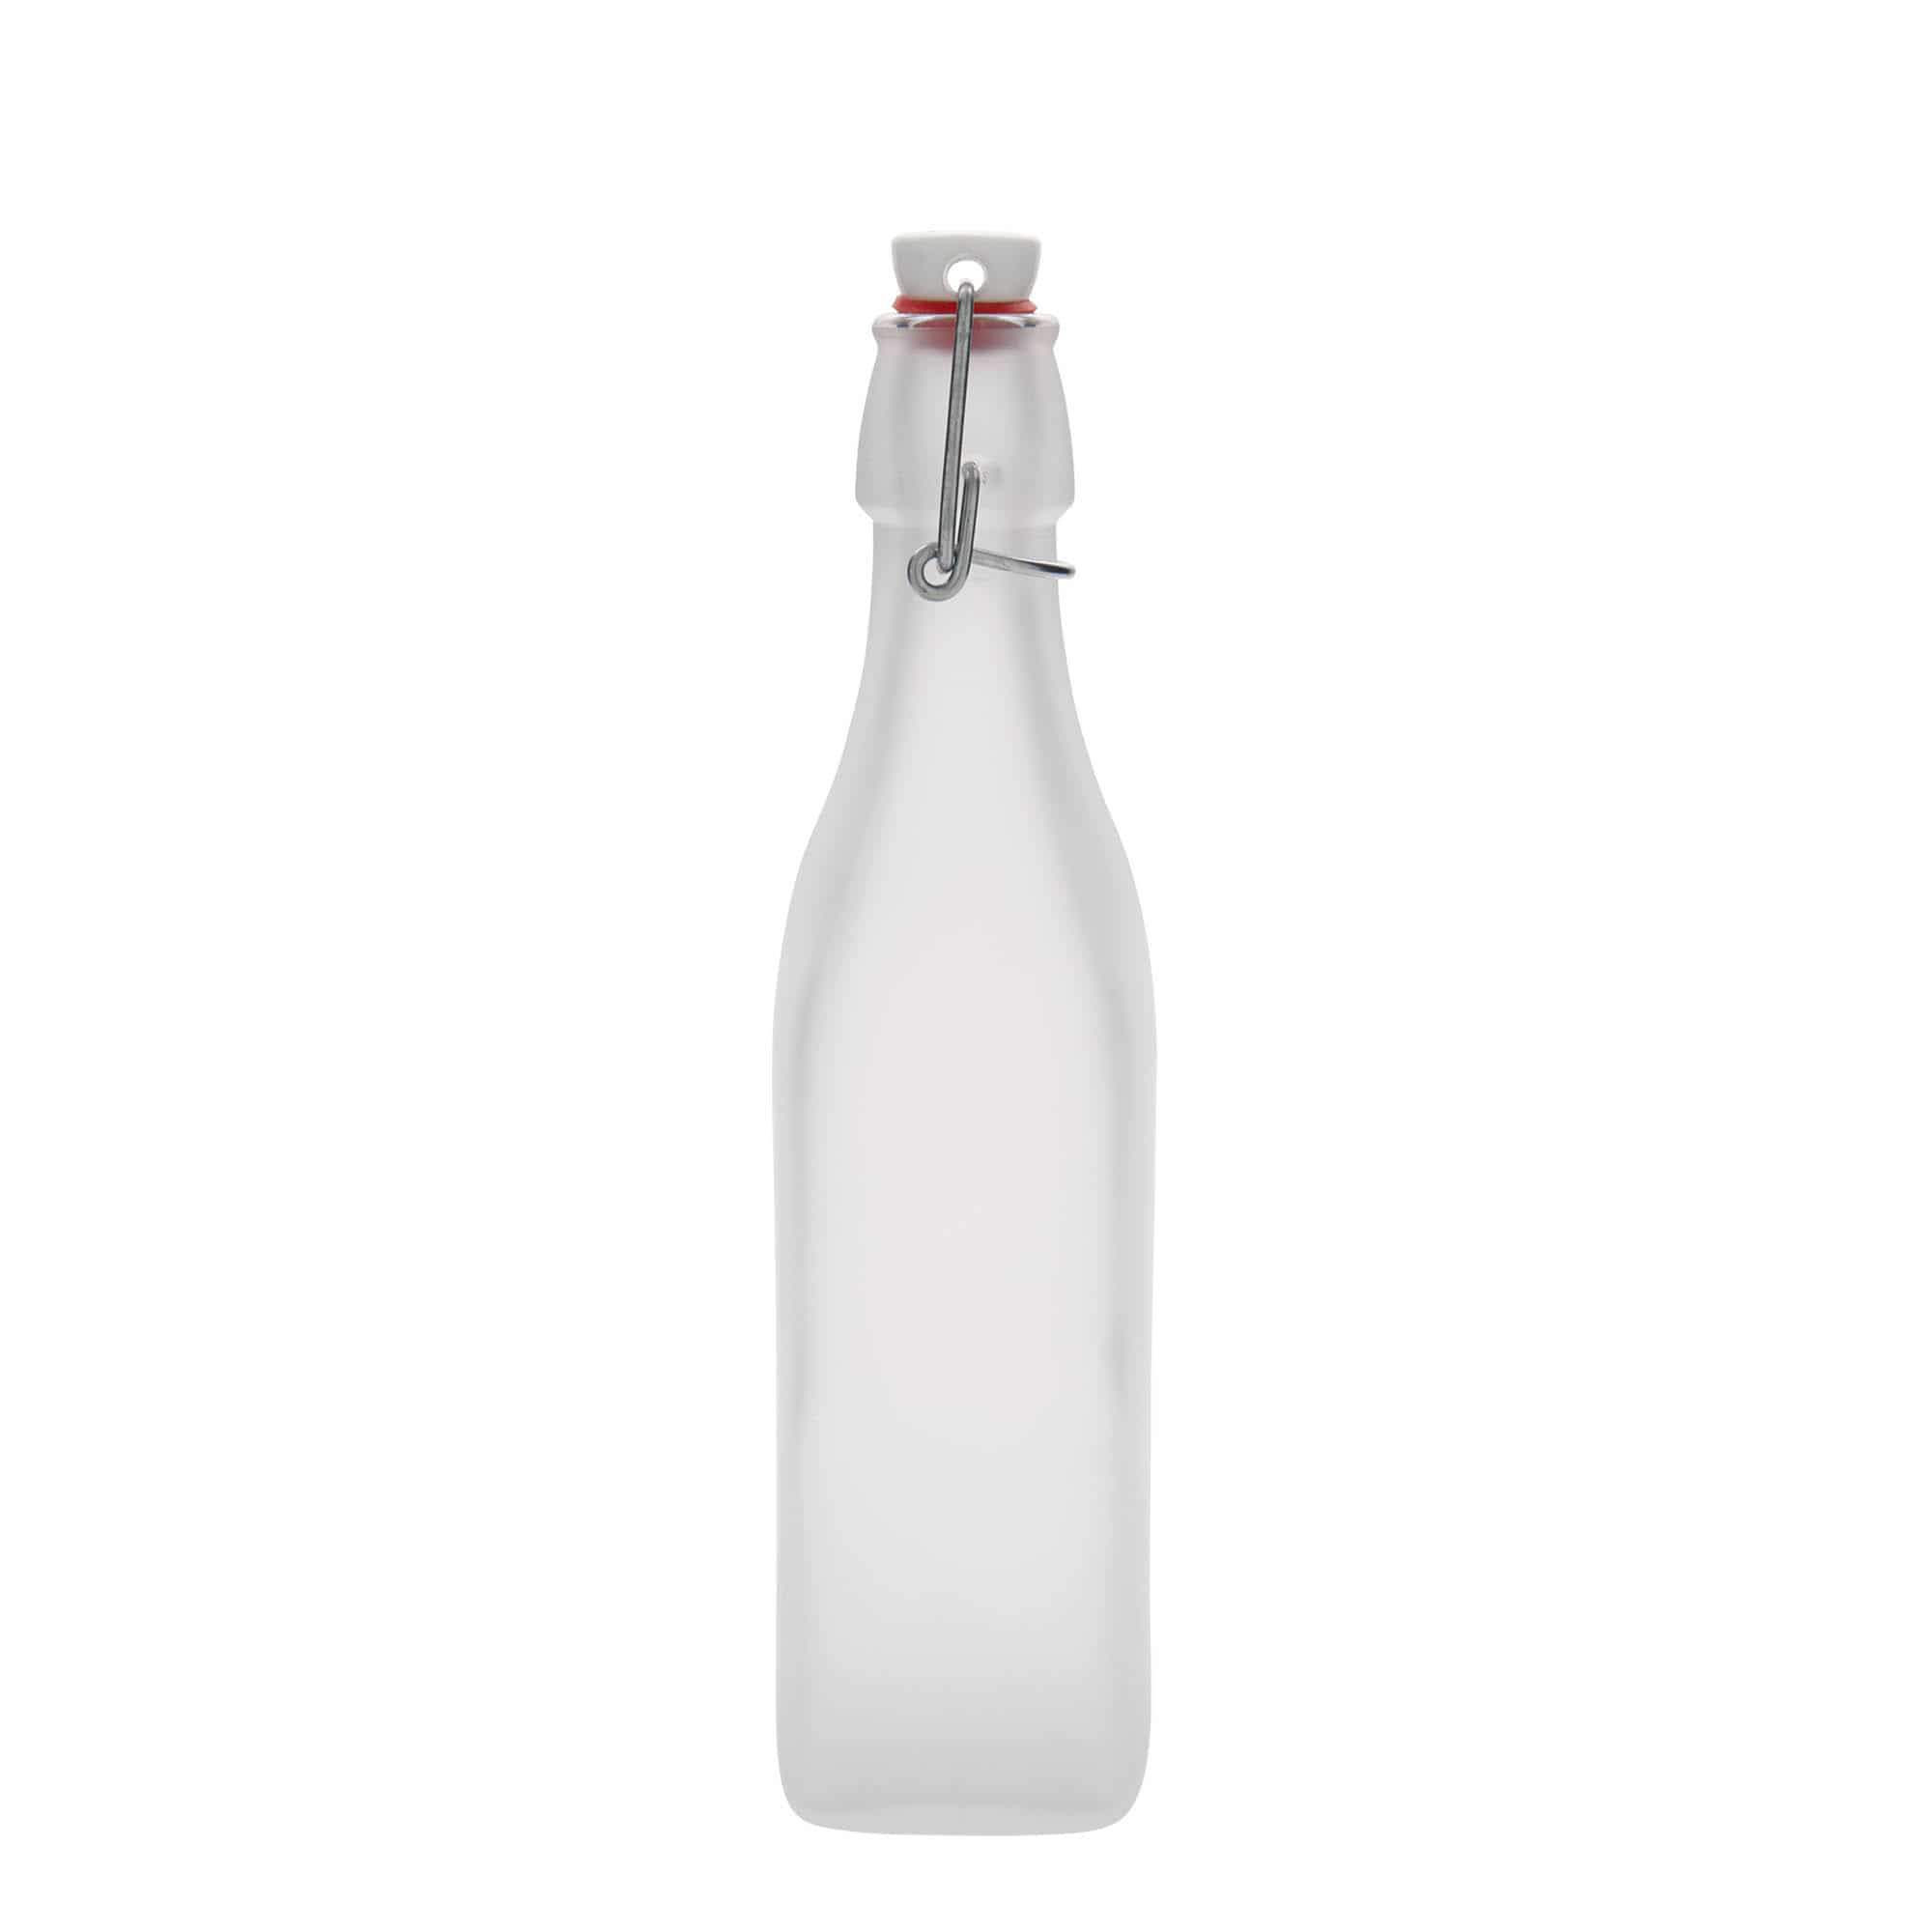 500 ml glass bottle 'Swing', square, white, closure: swing top